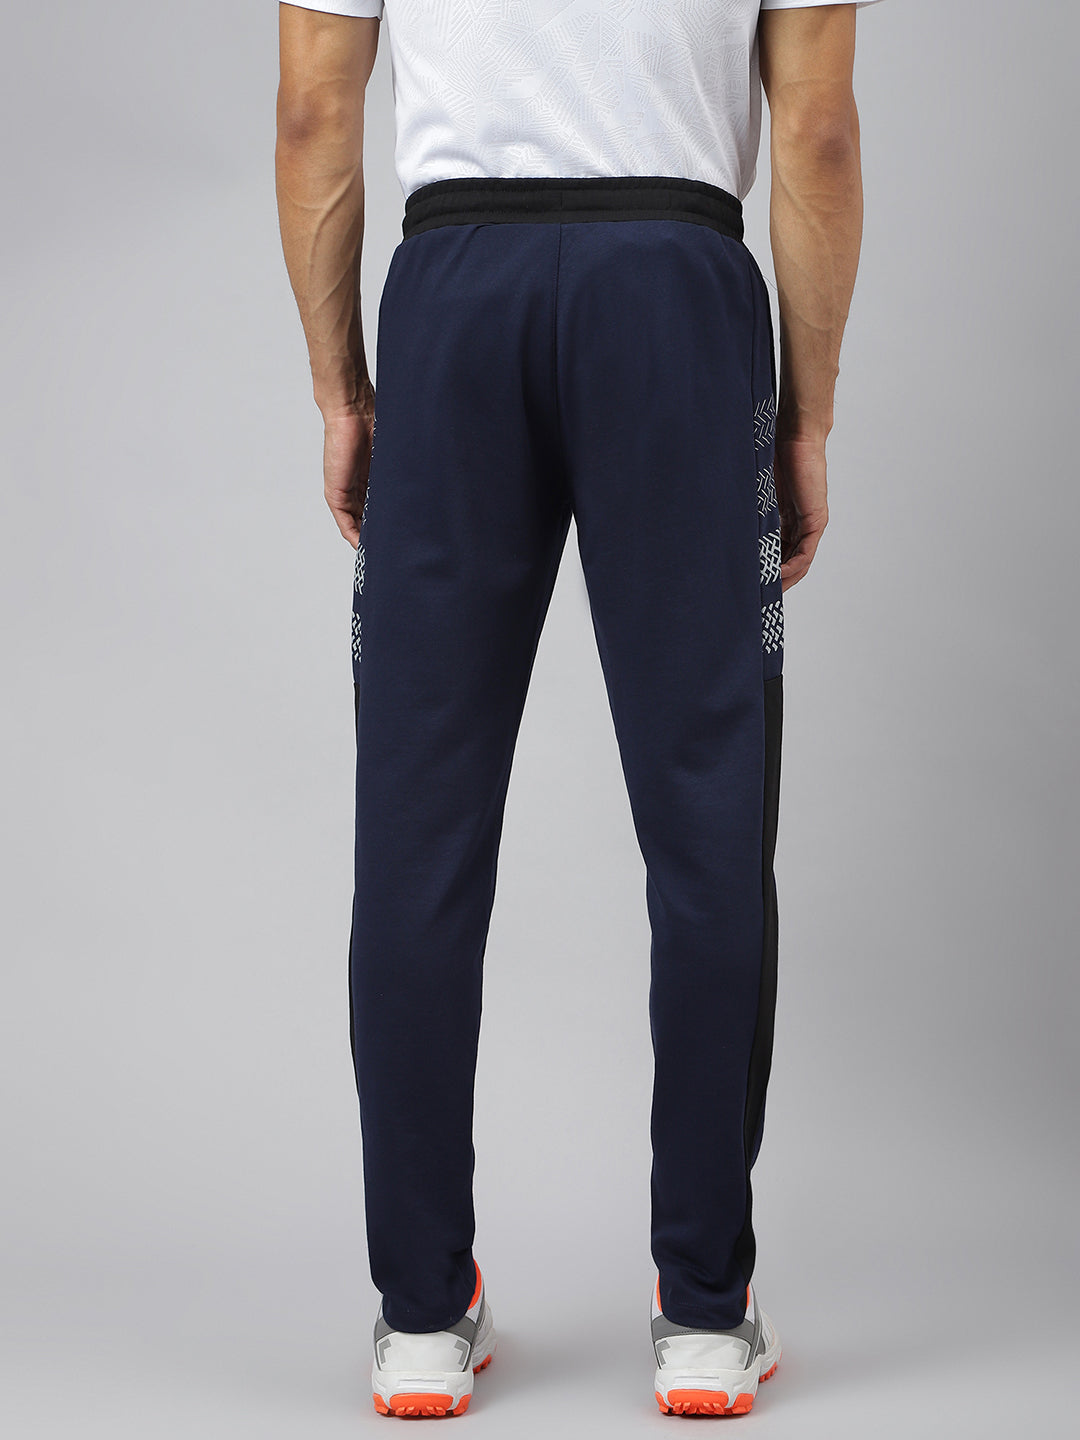 Alcis Men Graphic-Print Dress Blue Soft-Touch Athleisure Track Pants